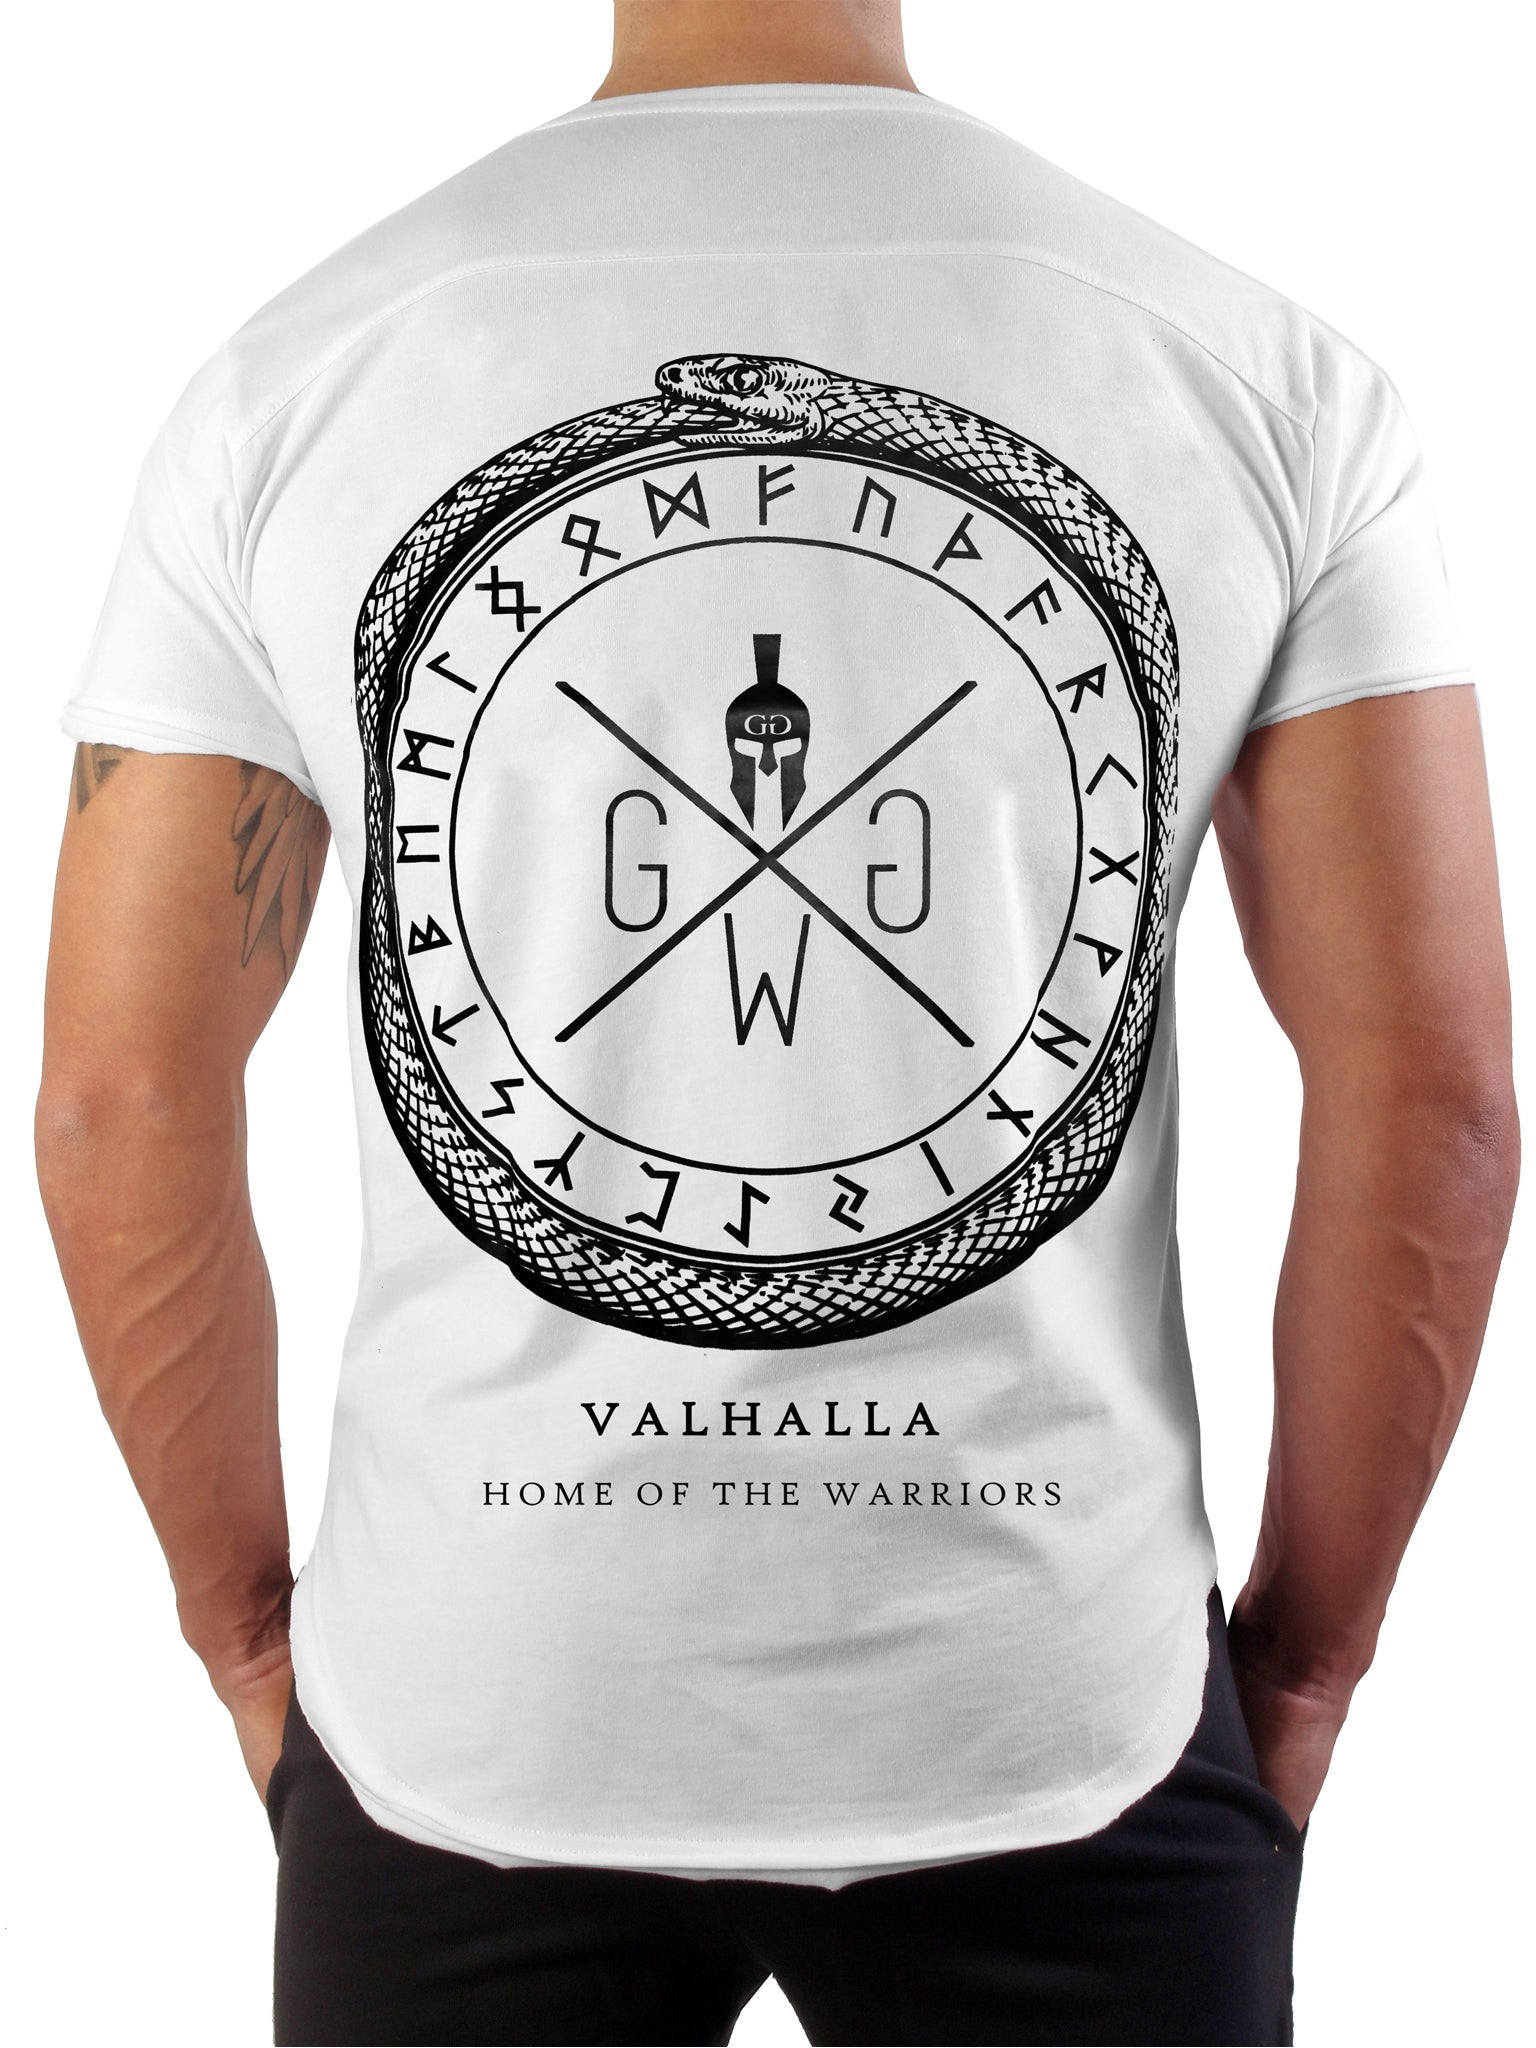 Valhalla T-Shirt - Weiss - Gym Generation®-7640171167077-www.gymgeneration.ch